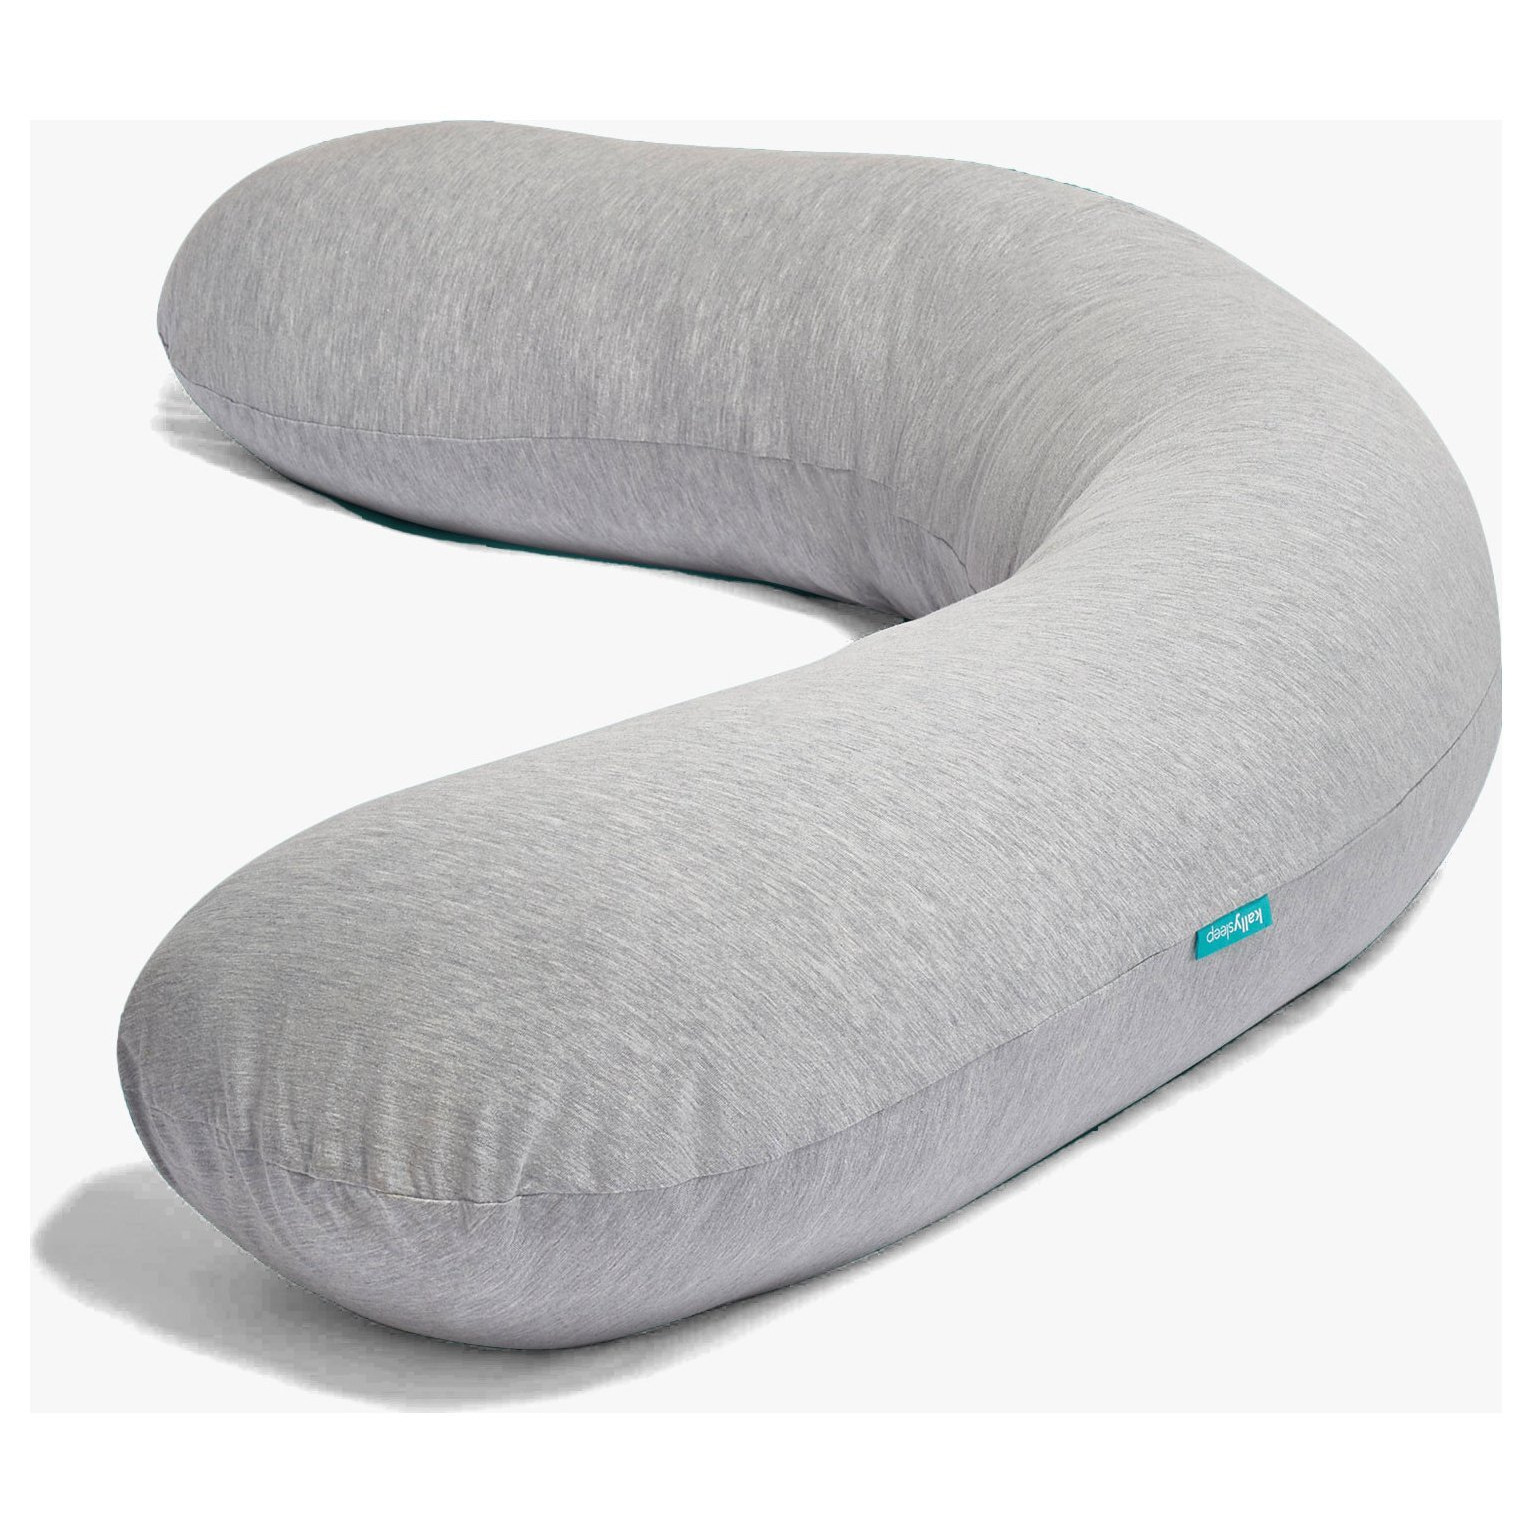 Kallysleep Non Allergic Medium Firm Body Pillow - image 1